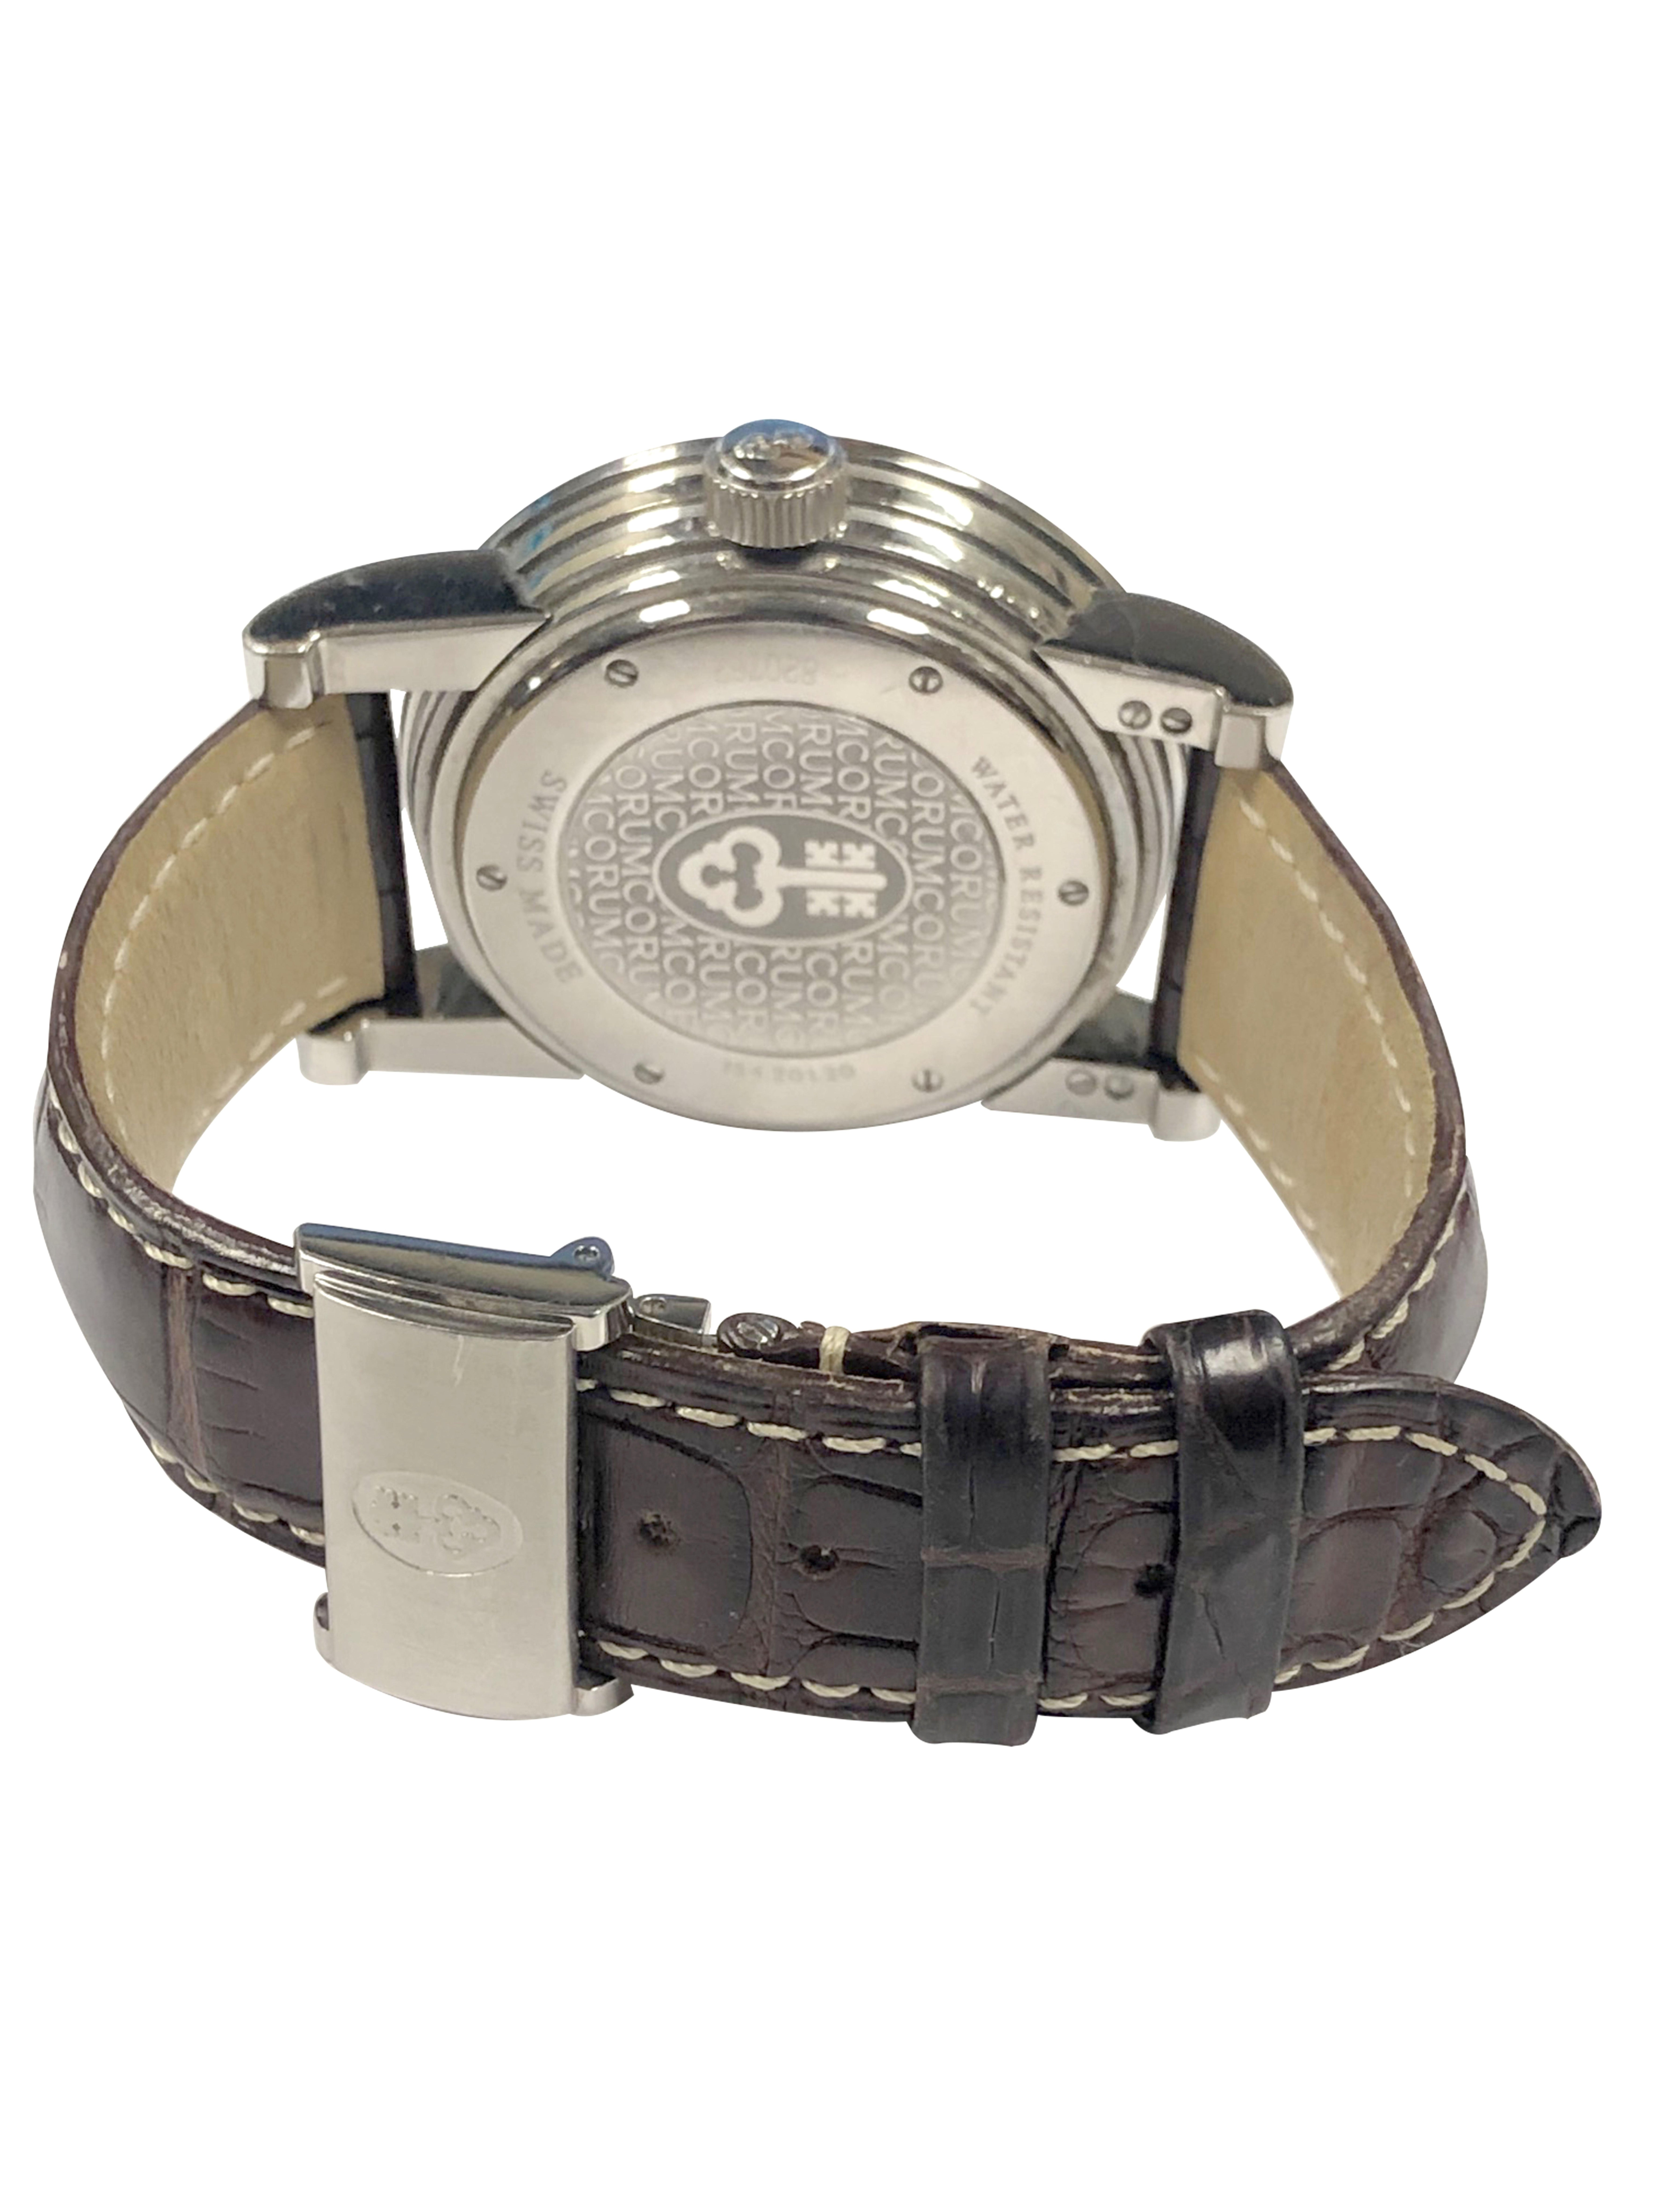 corum limited edition watch